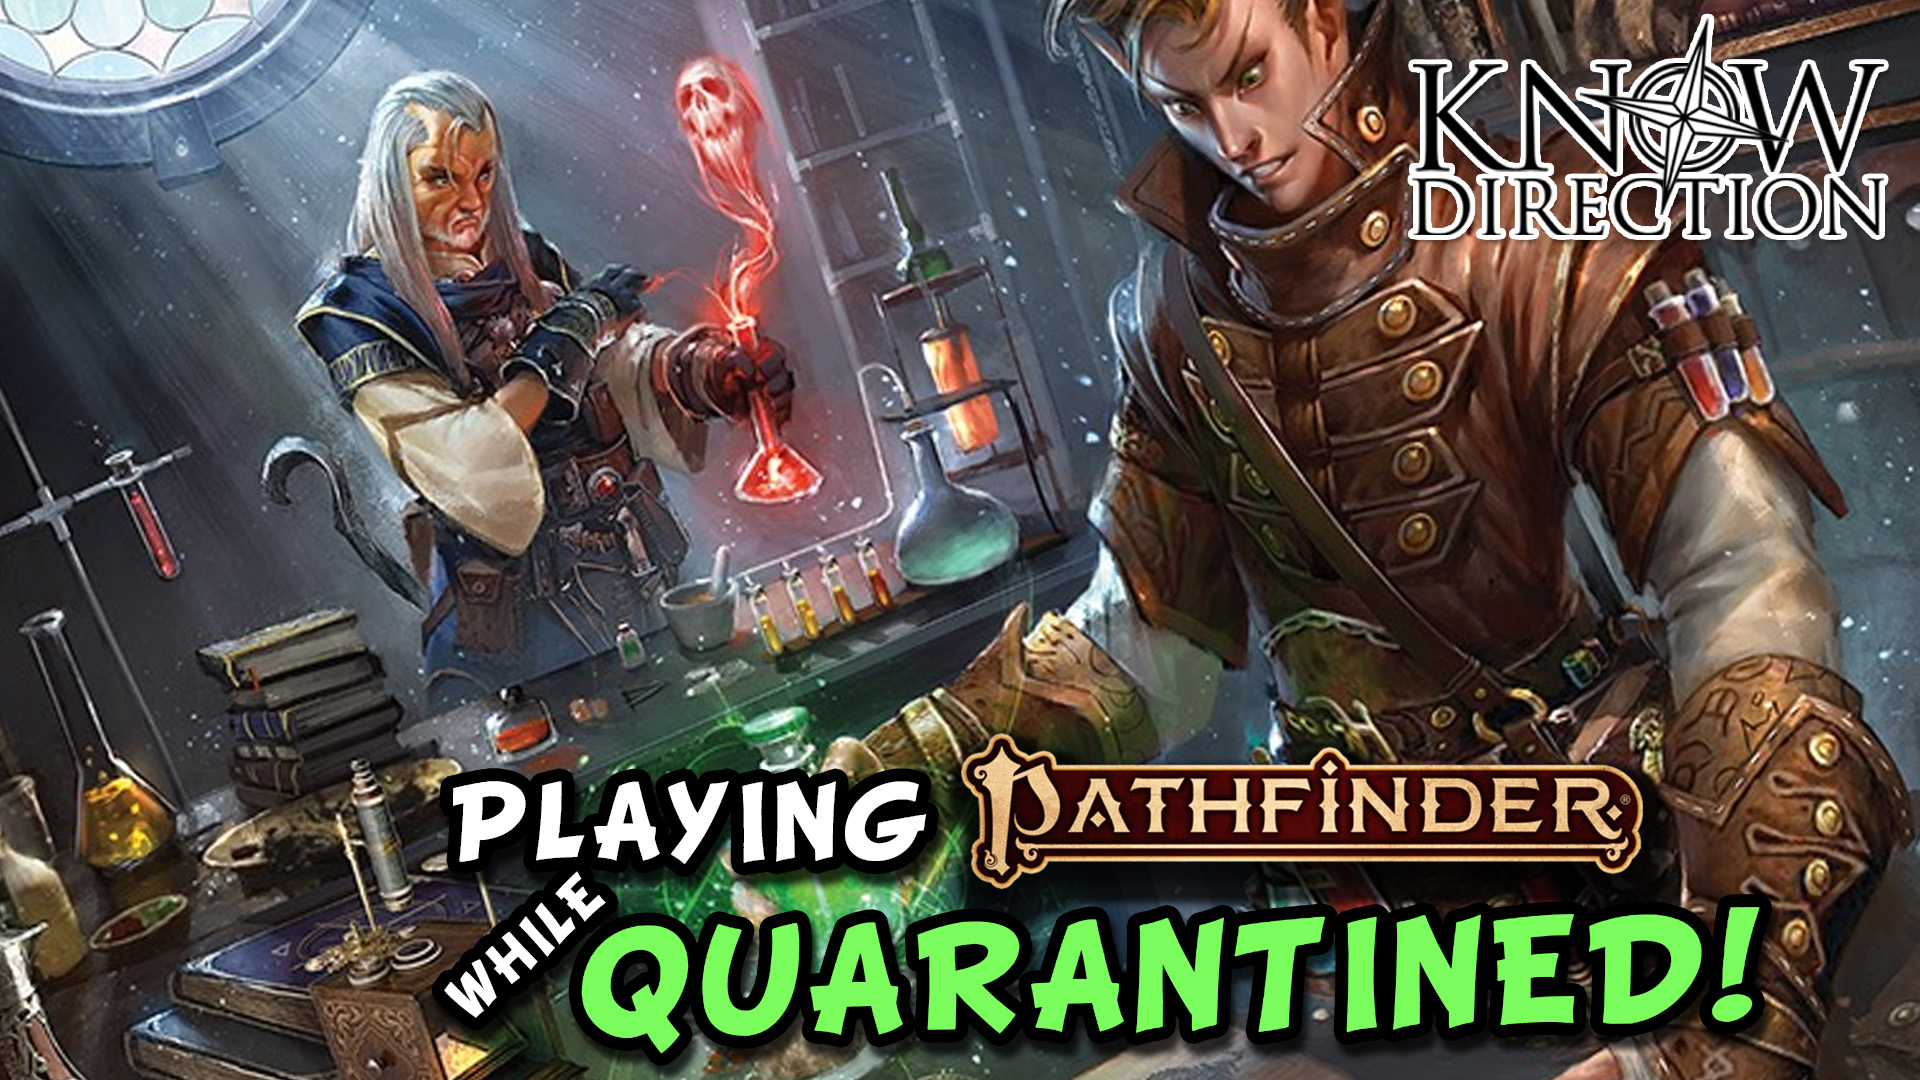 Playing Pathfinder while Quarantined!